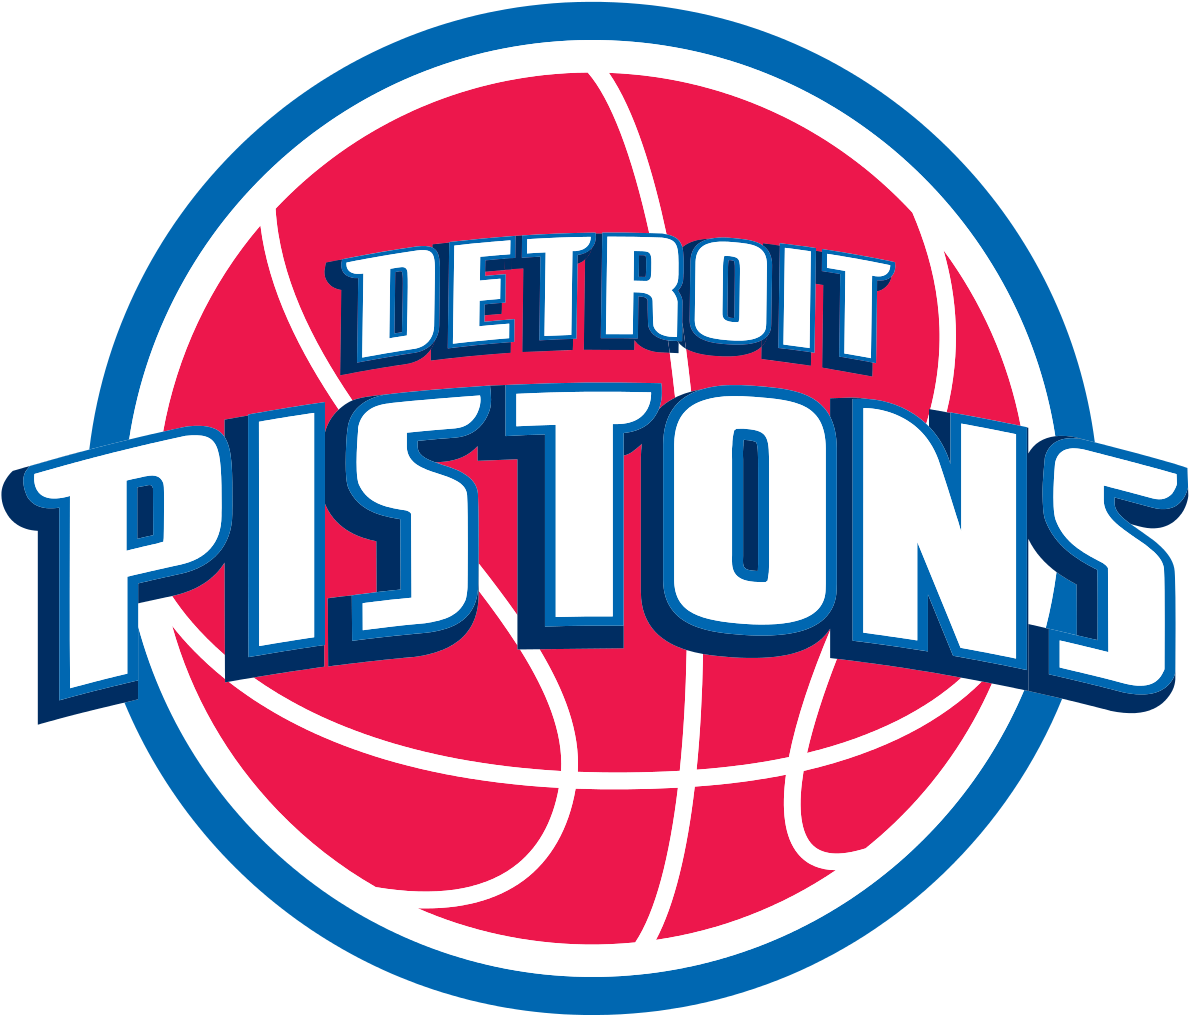 Wikipedia, The Free Encyclopedia - Detroit Pistons Logo 2016 (1229x1024)